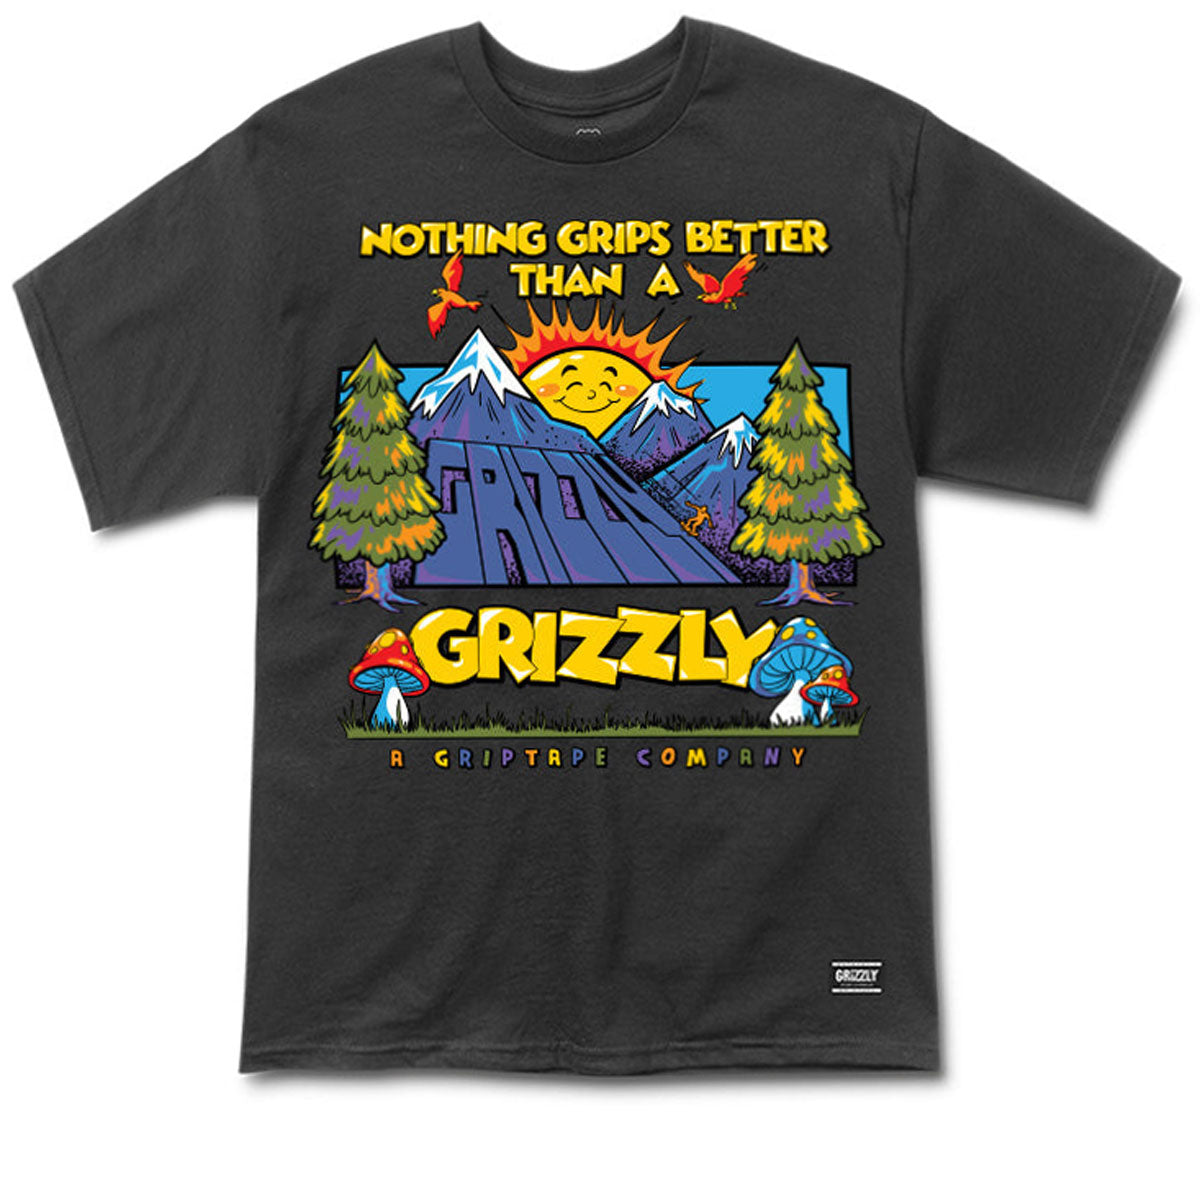 Grizzly Sunshine T-Shirt - Black image 1